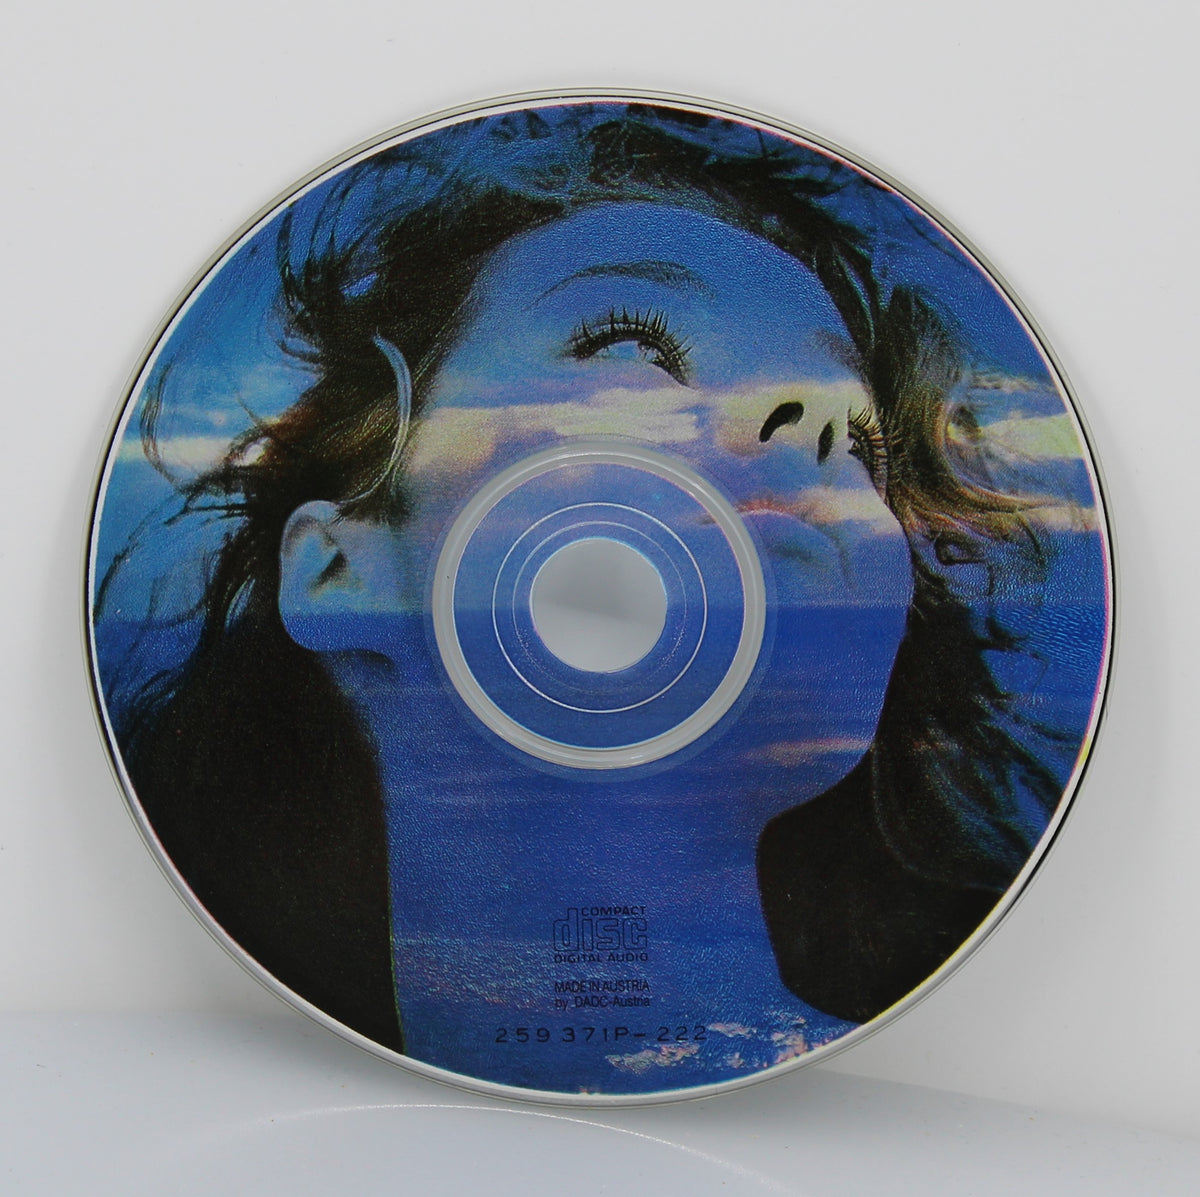 Sandra – Into A Secret Land, CD, Album, Picturedisc, Germany 1988